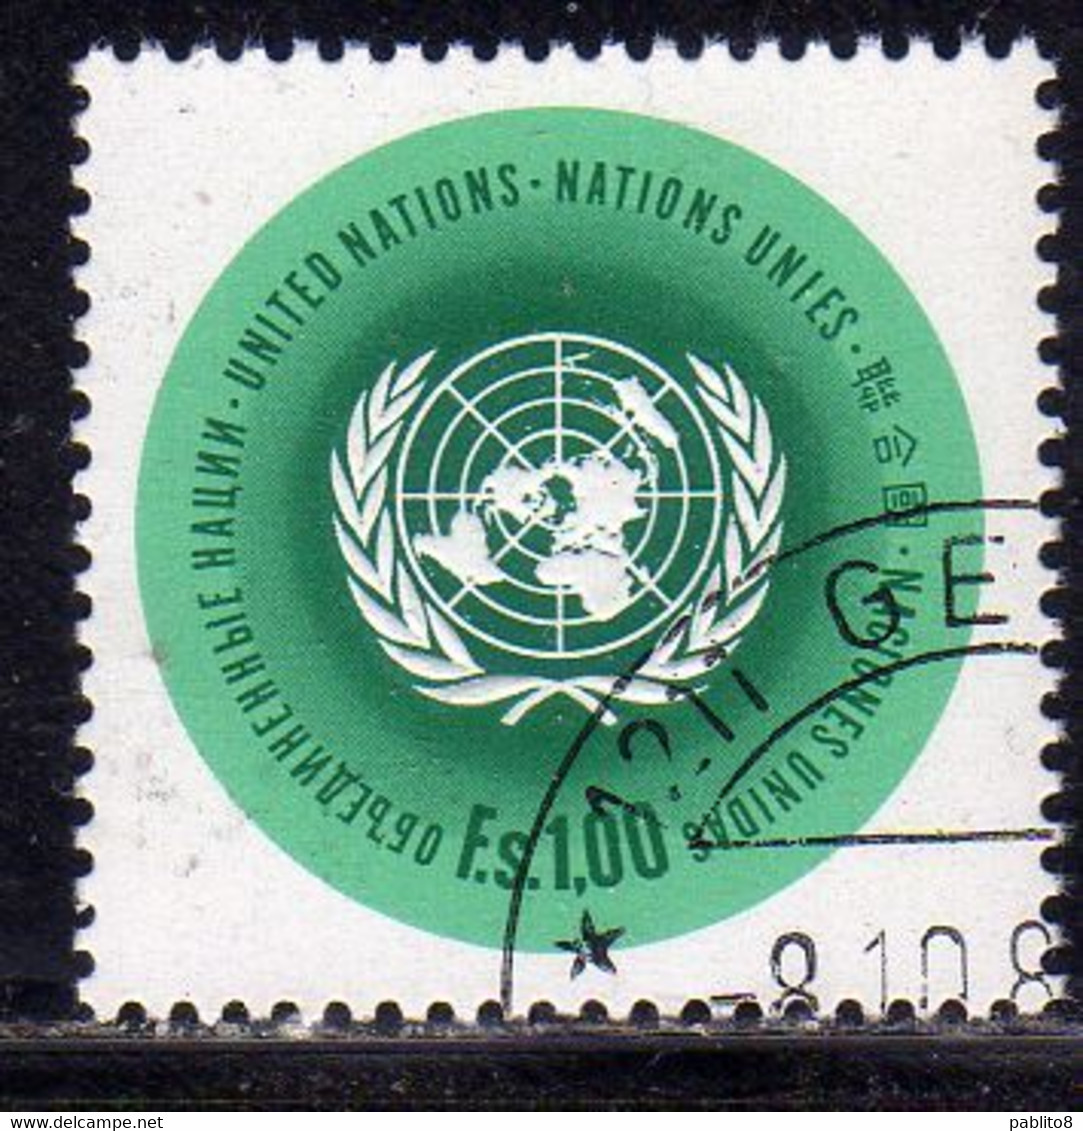 UNITED NATIONS GENEVE GINEVRA GENEVA SVIZZERA ONU UN UNO 1969 1970 EMBLEM EMBLEMA 1.00fr USED OBLITERE' - Used Stamps